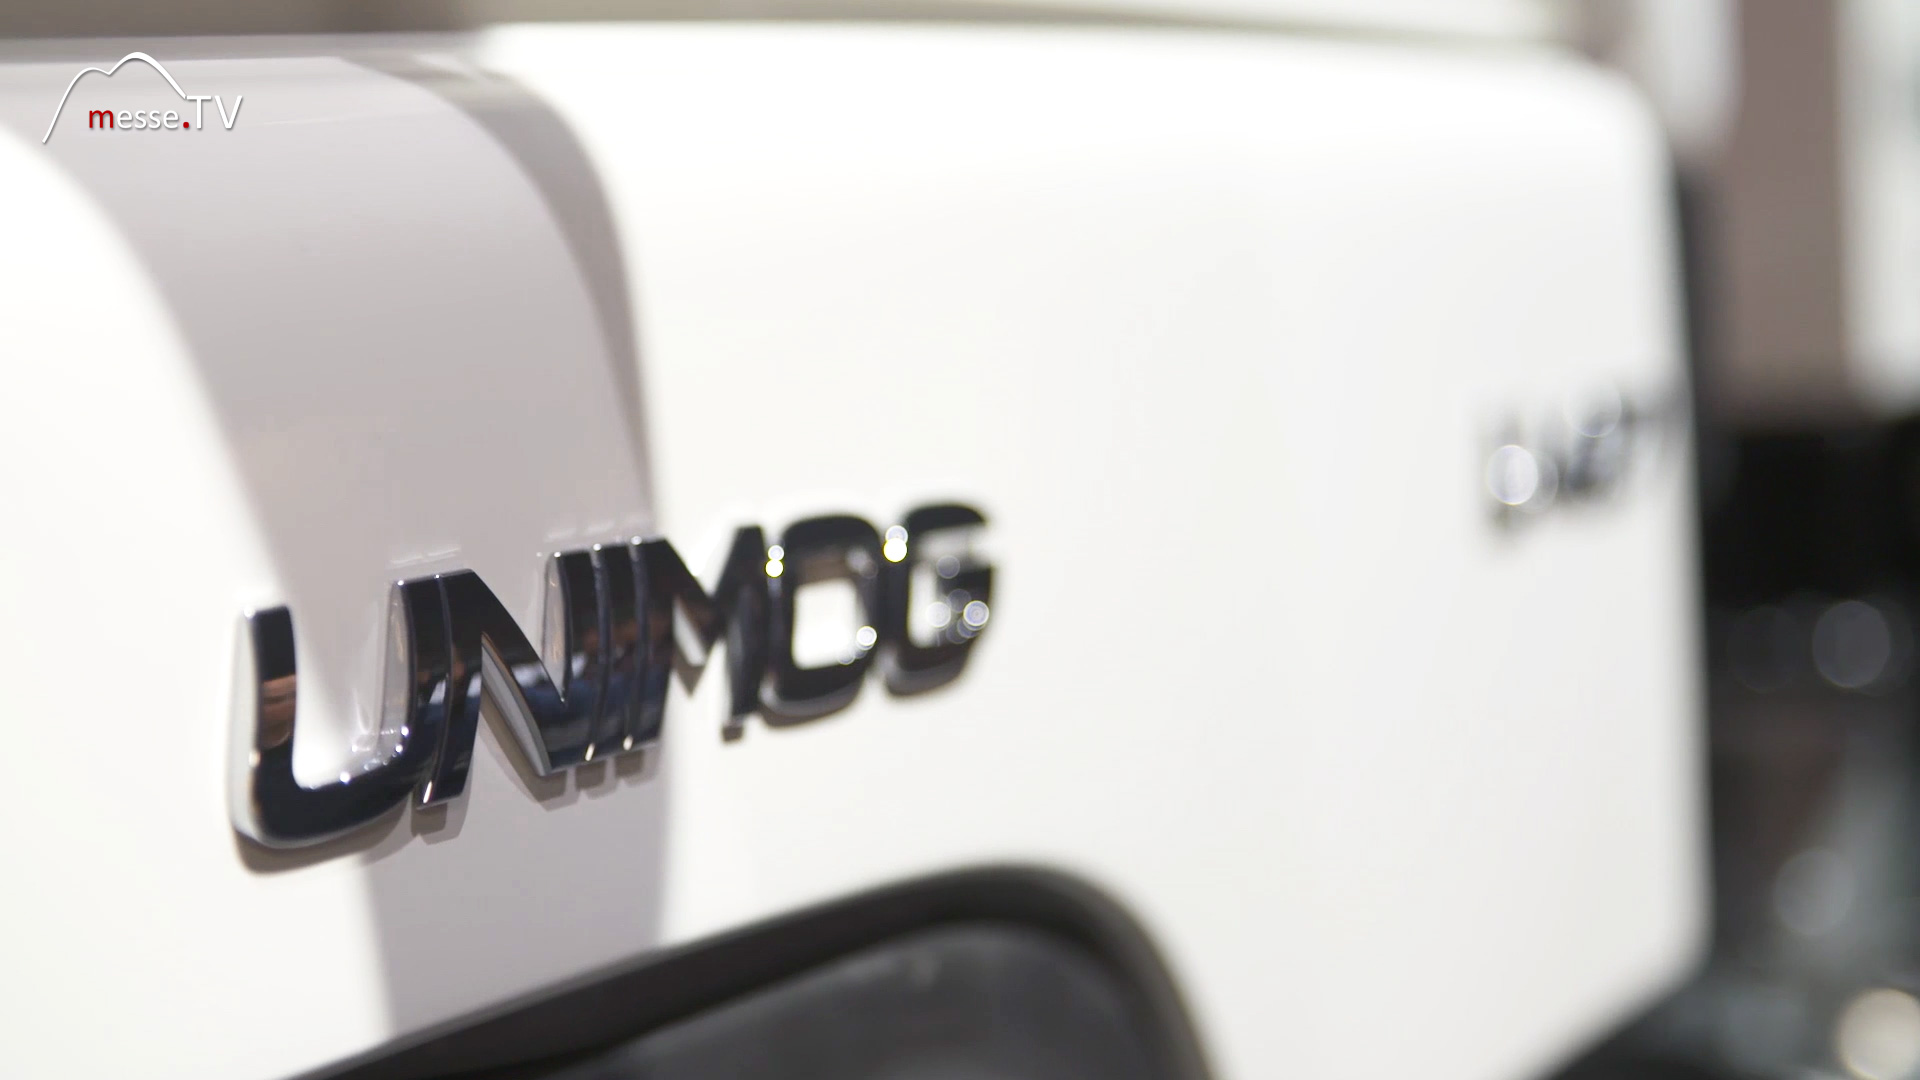 Mercedes Benz Unimog bauma 2019 Muenchen